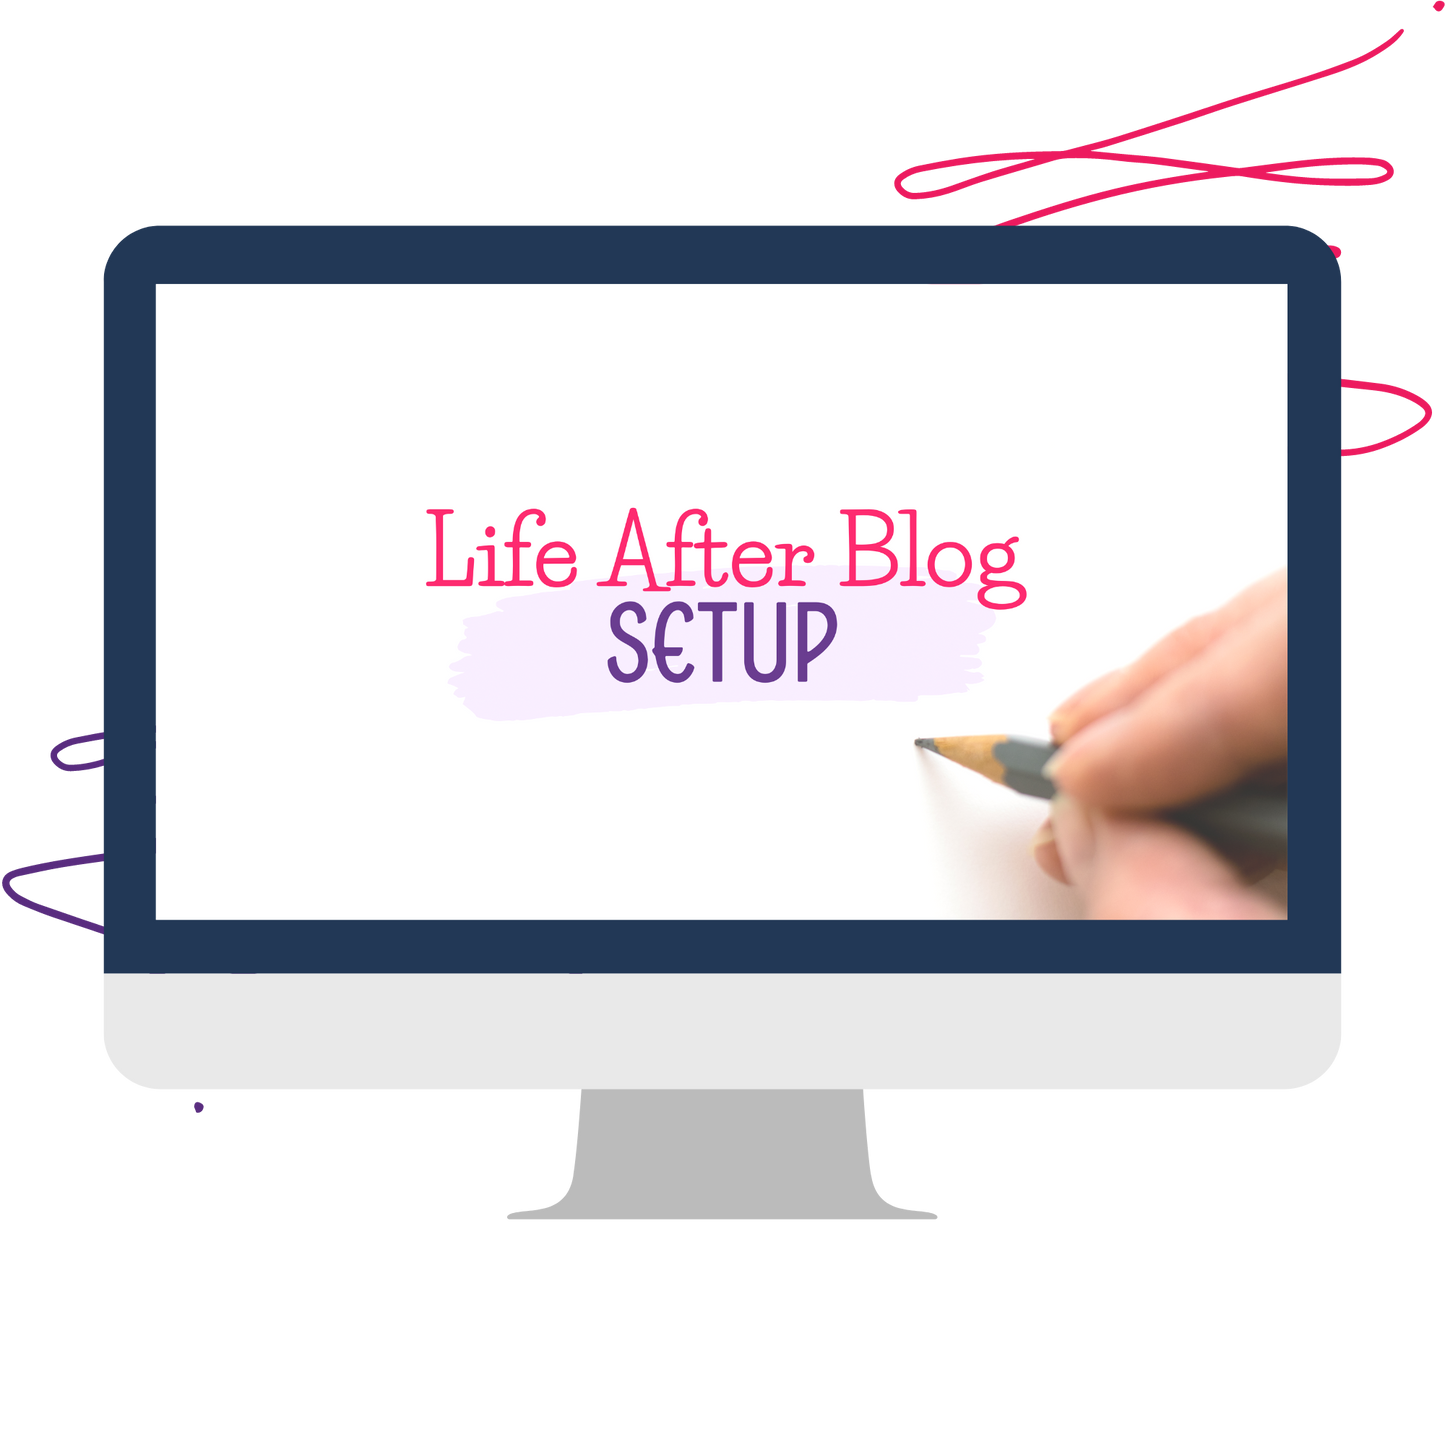 Life After Blog Setup